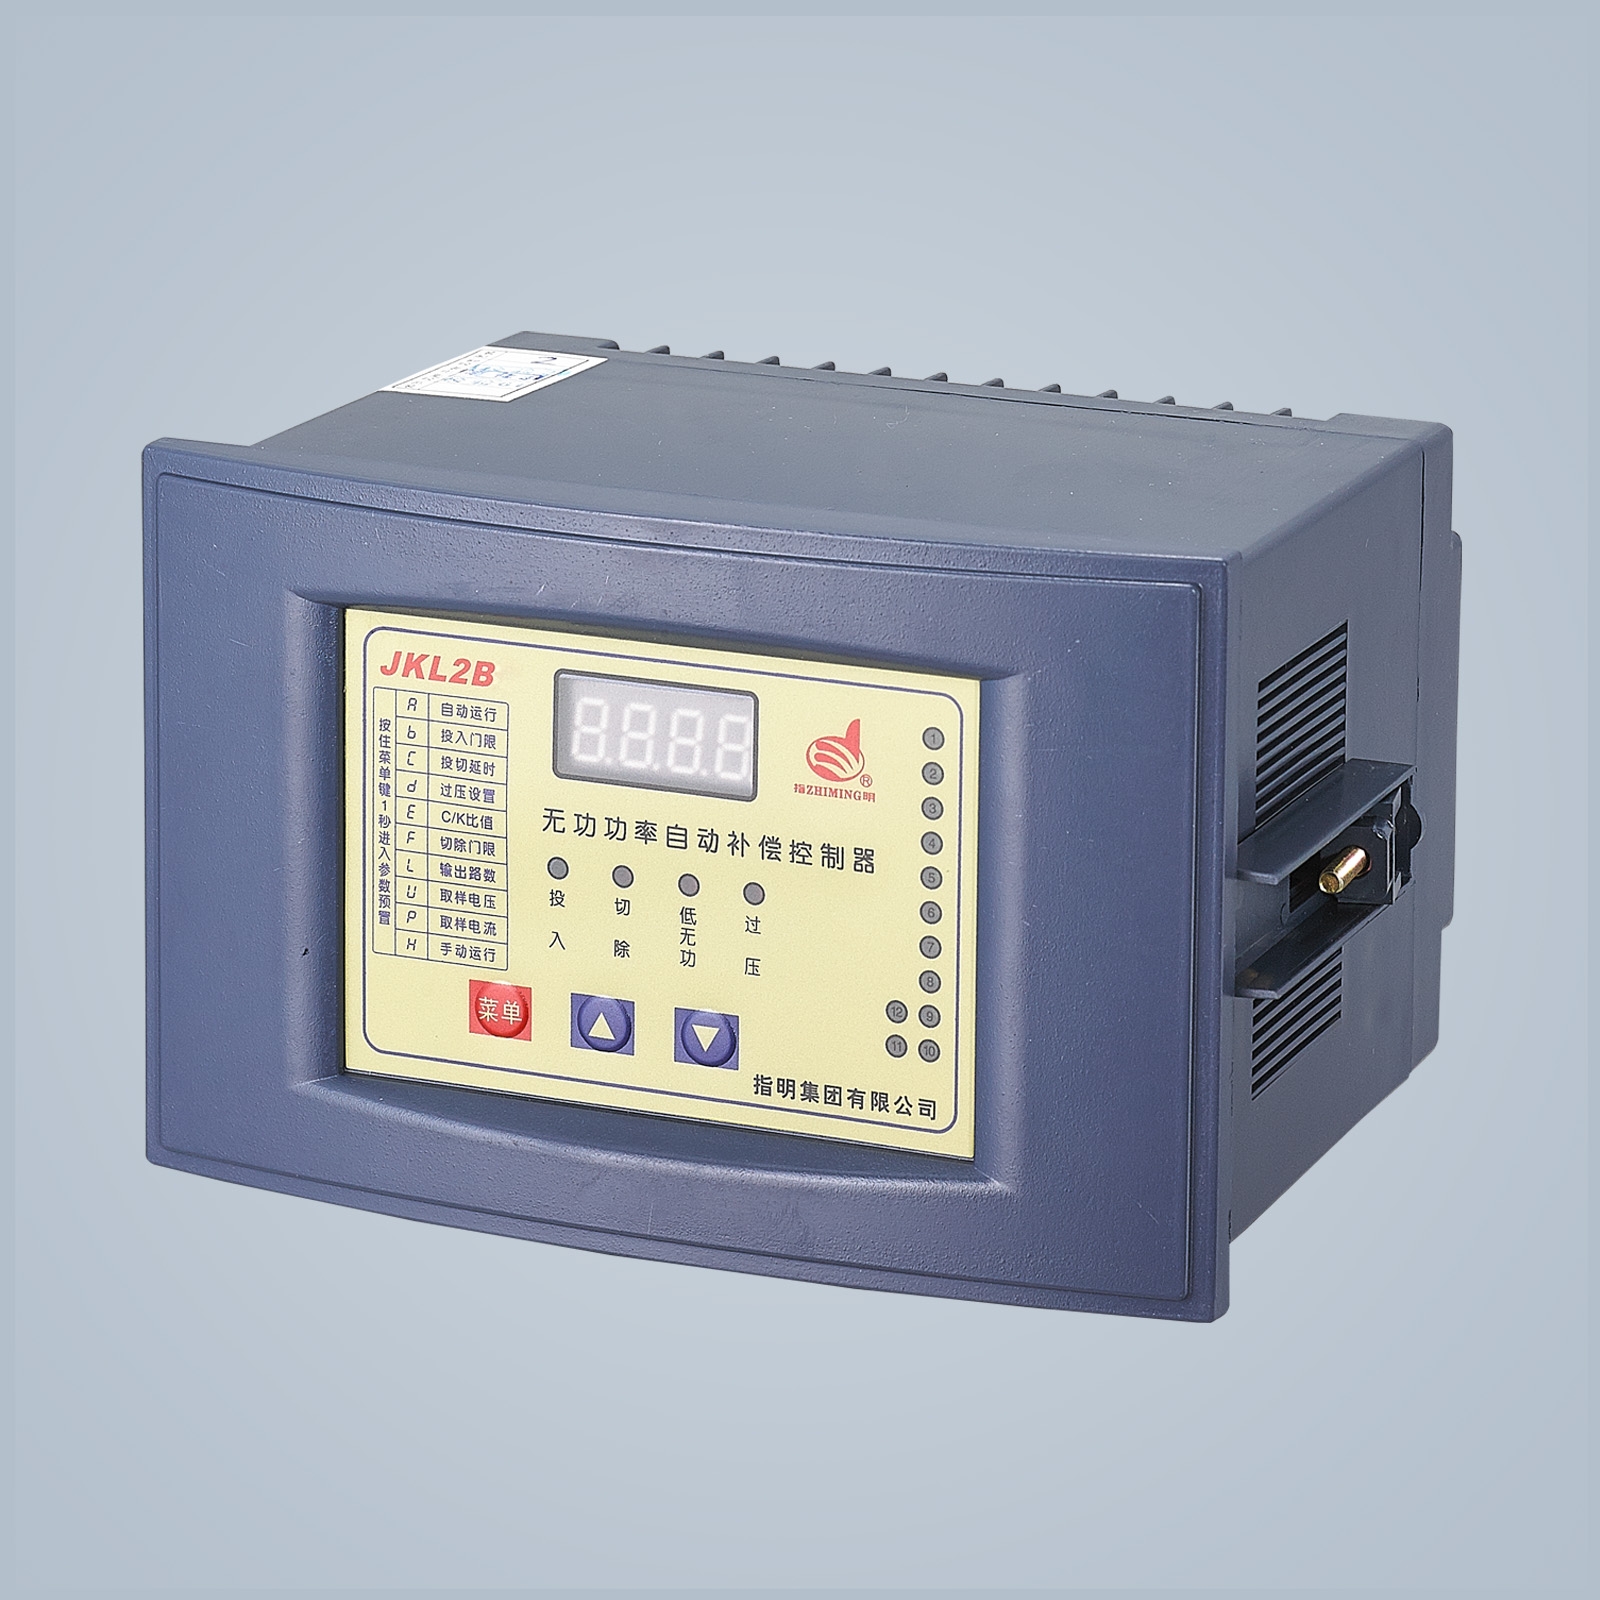 JKL2B Series Reactive power auto-compen sation controller 380V